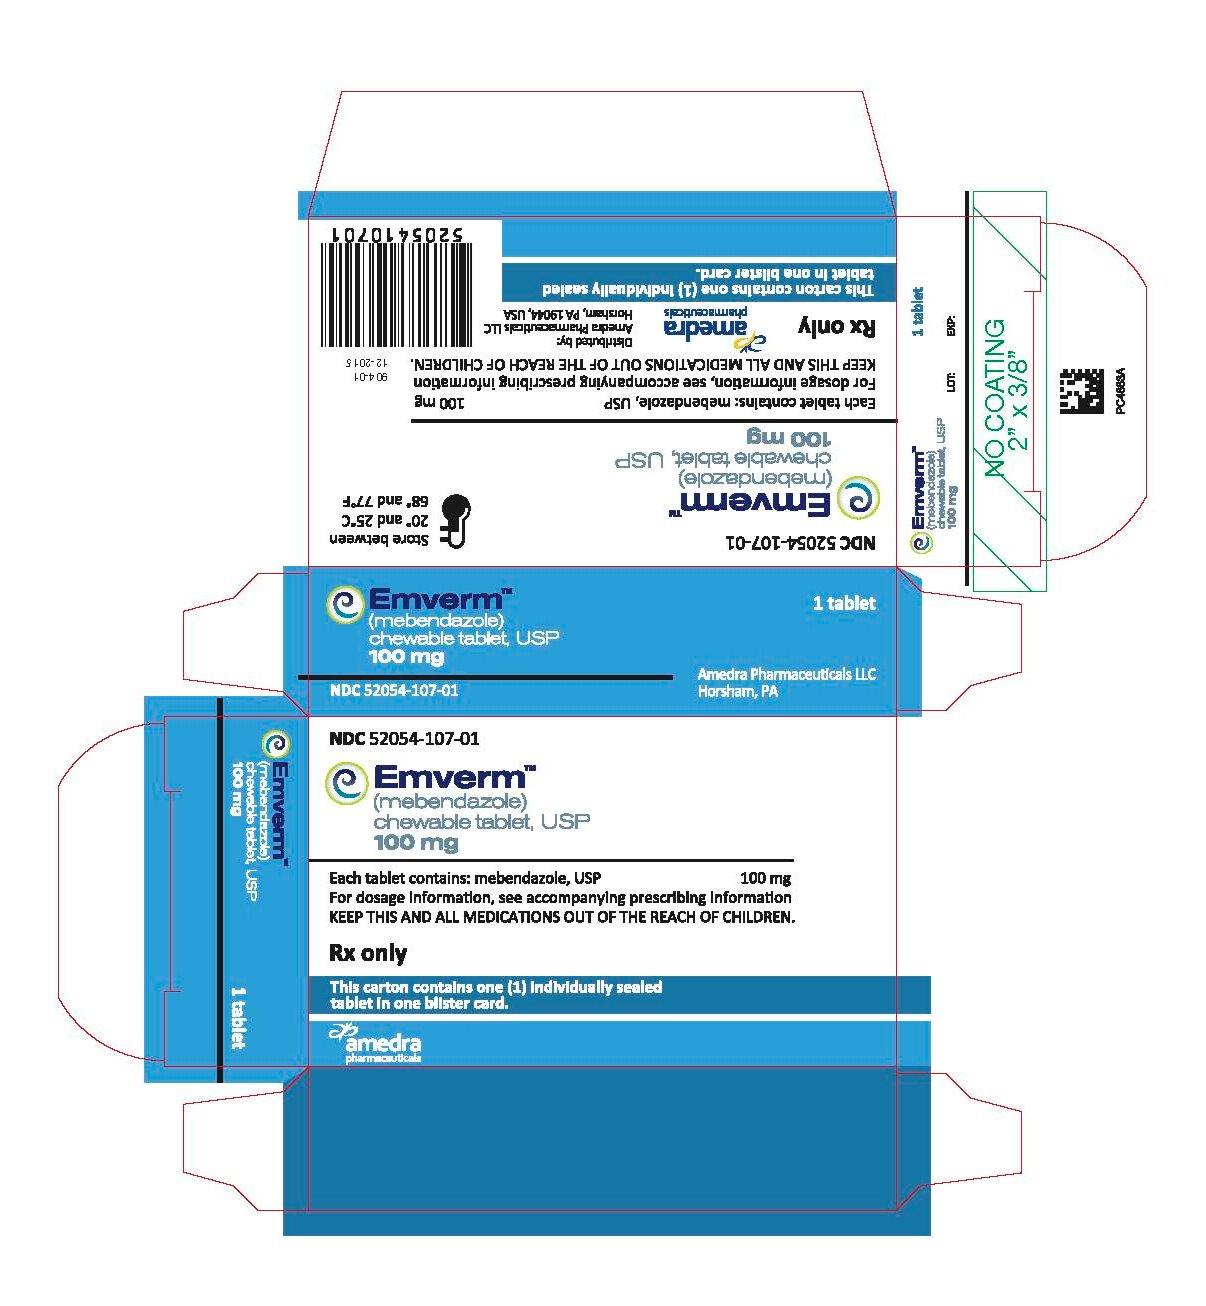 Emverm™ (mebendazole) chewable tablet, USP 100 mg